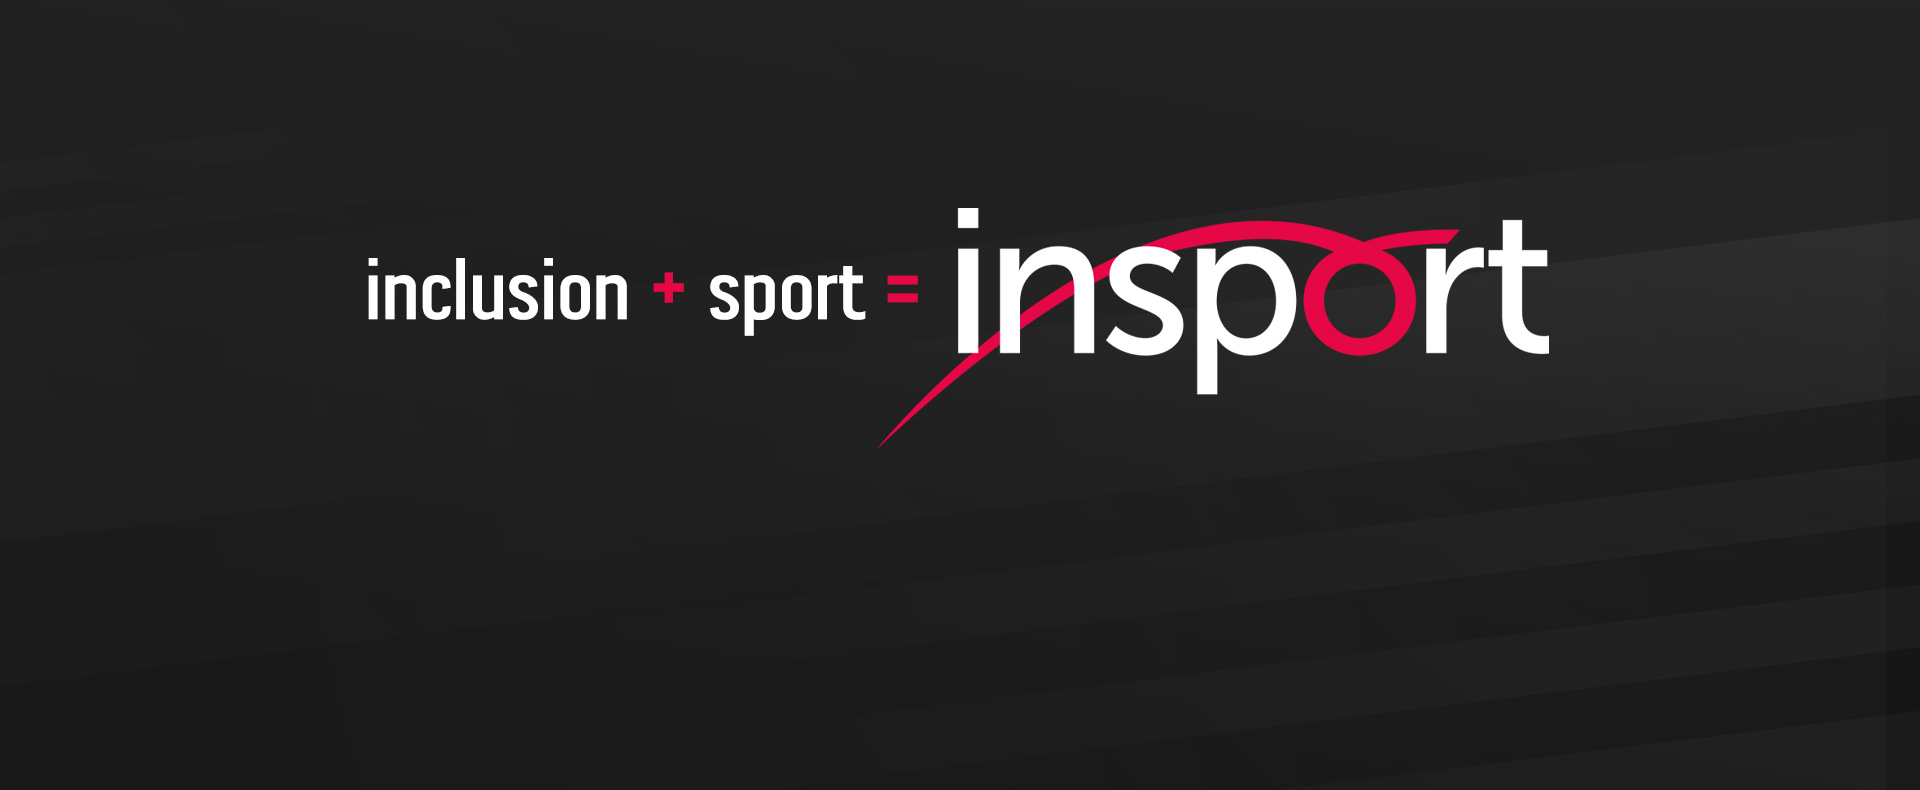 inclusion + sport = insport